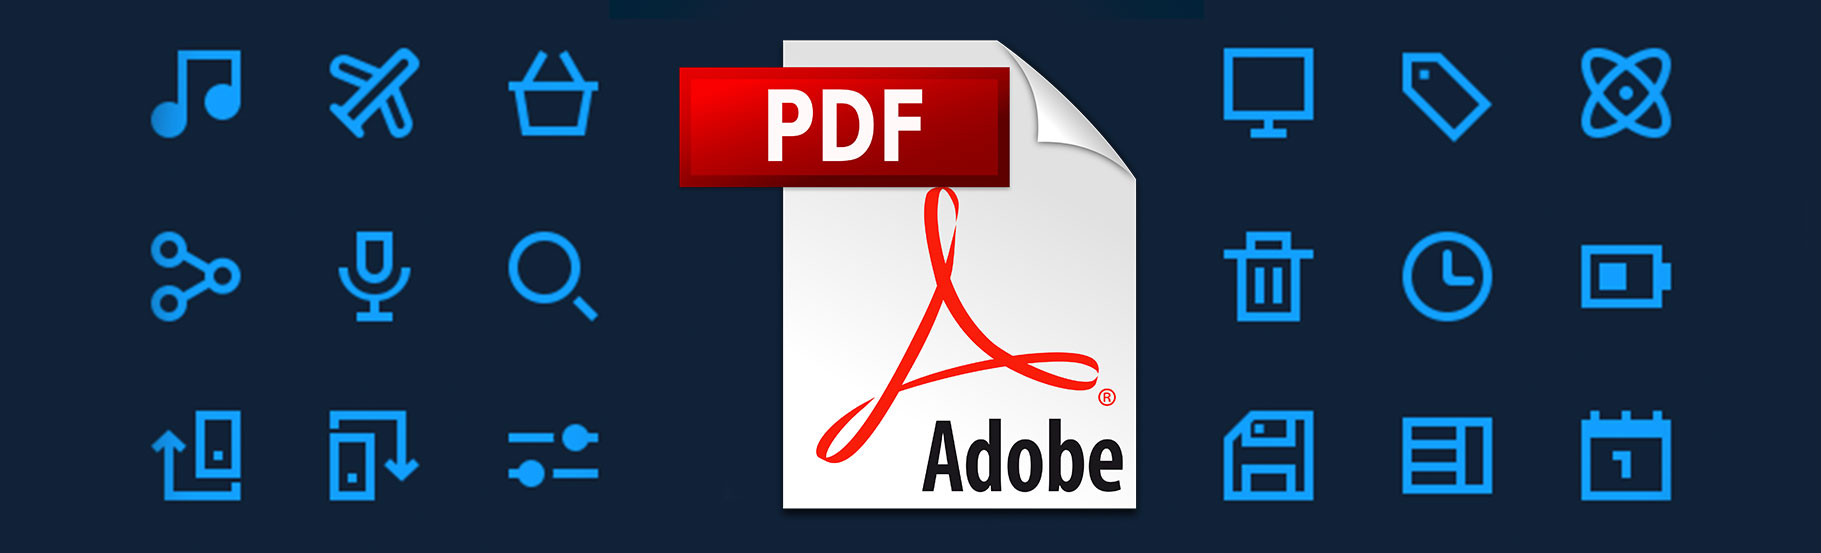 PDF – Portable Document Format